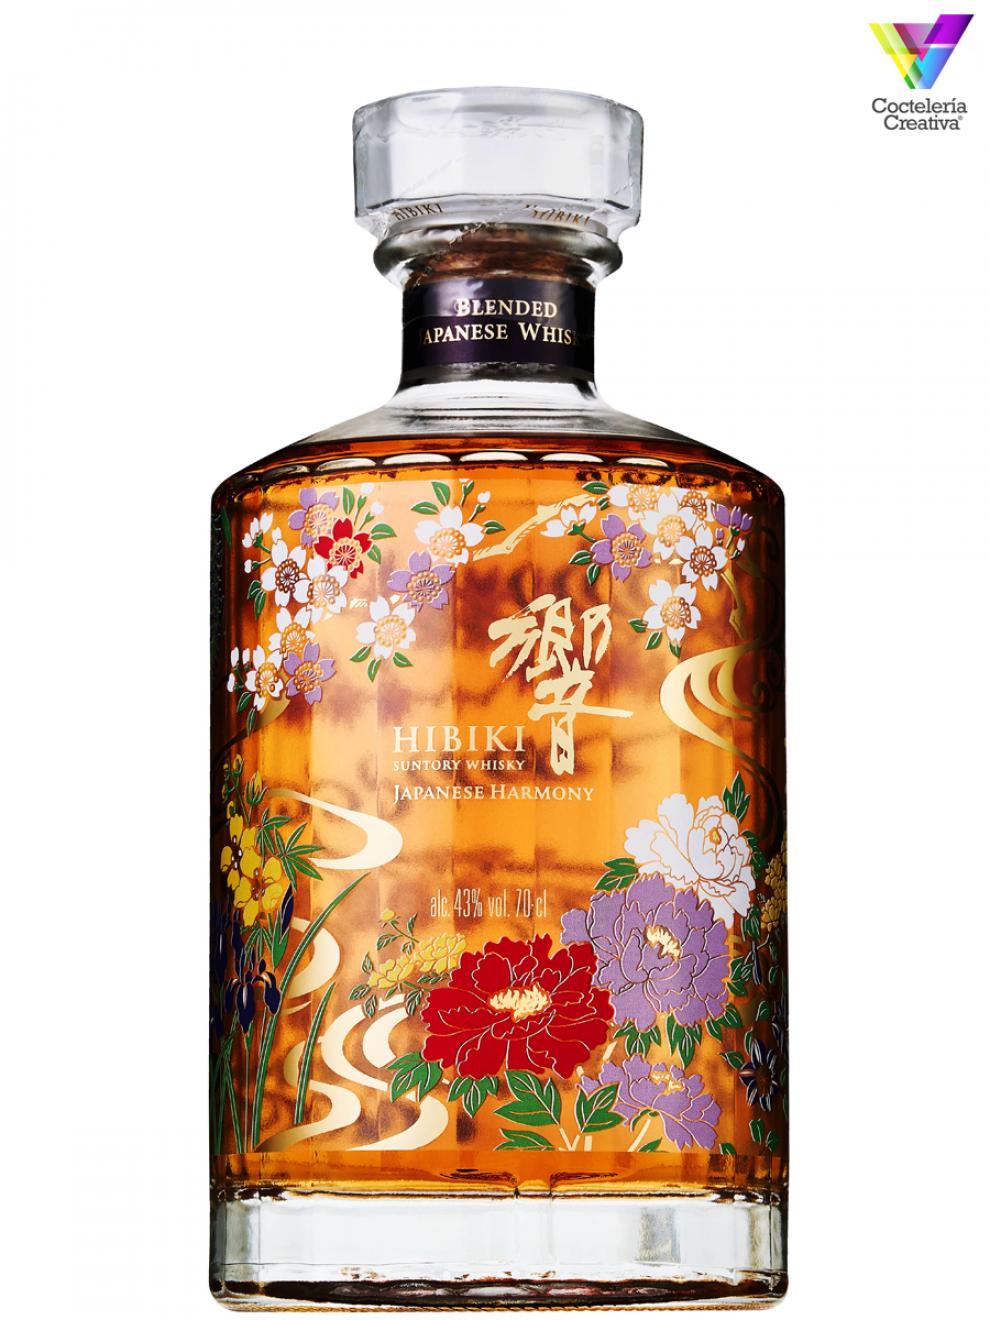 Botella de Hibiki Japaneses Harmony de Suntory